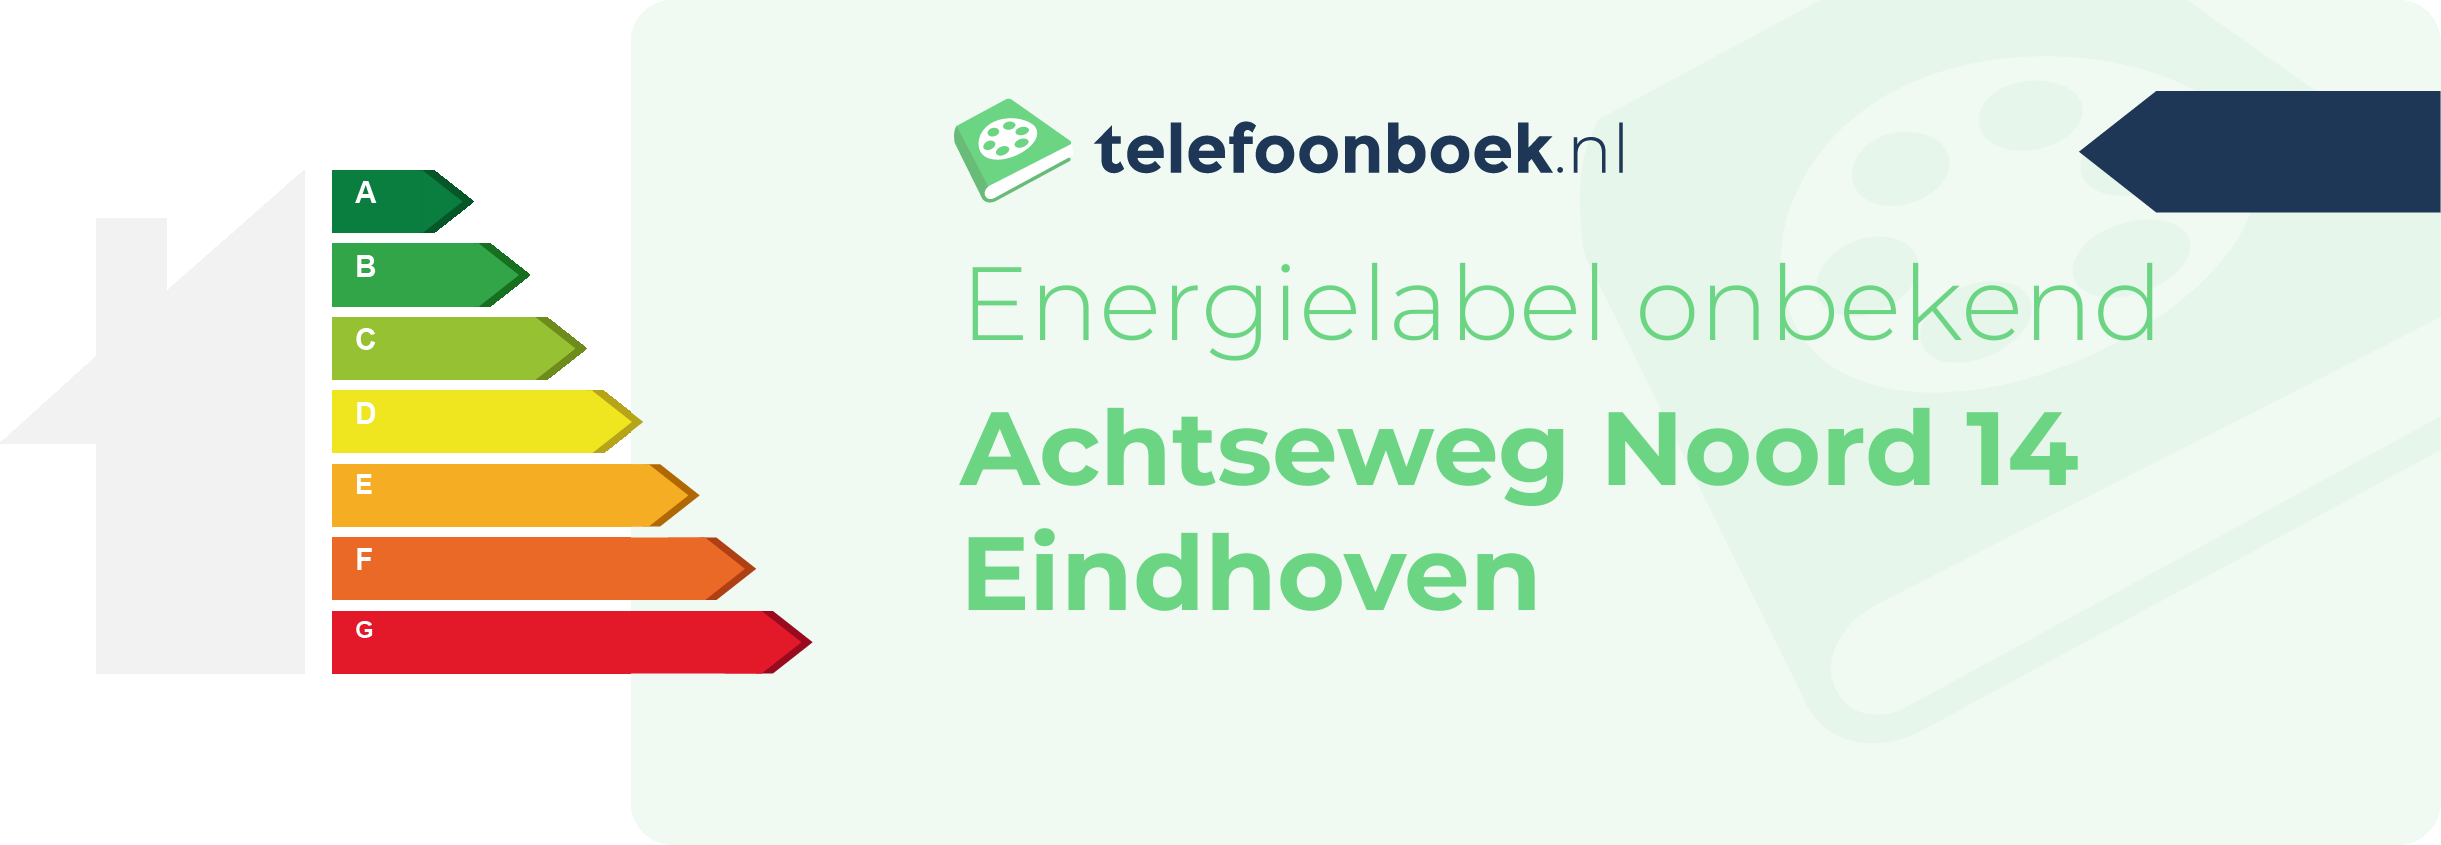 Energielabel Achtseweg Noord 14 Eindhoven